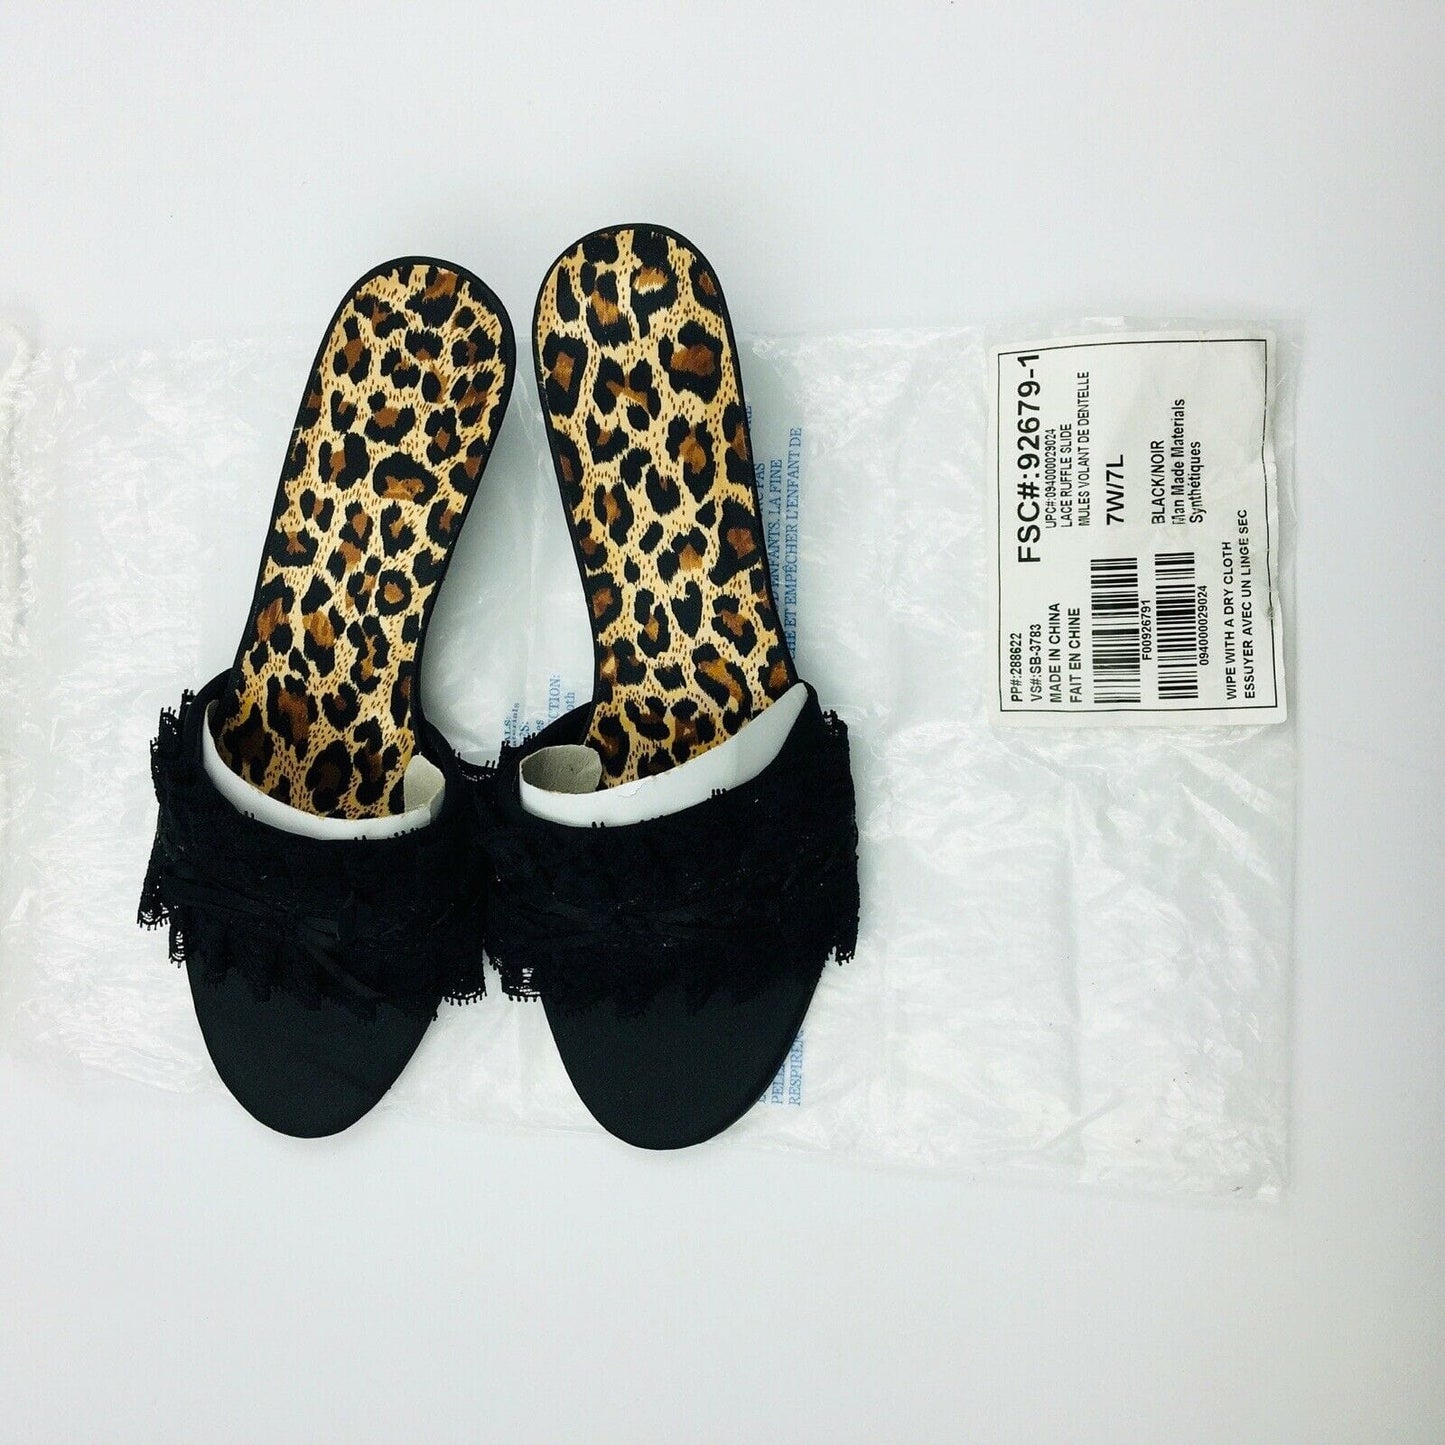 Womens Lace Ruffle Slide Heels, Black Cheetah Print - Size 7W